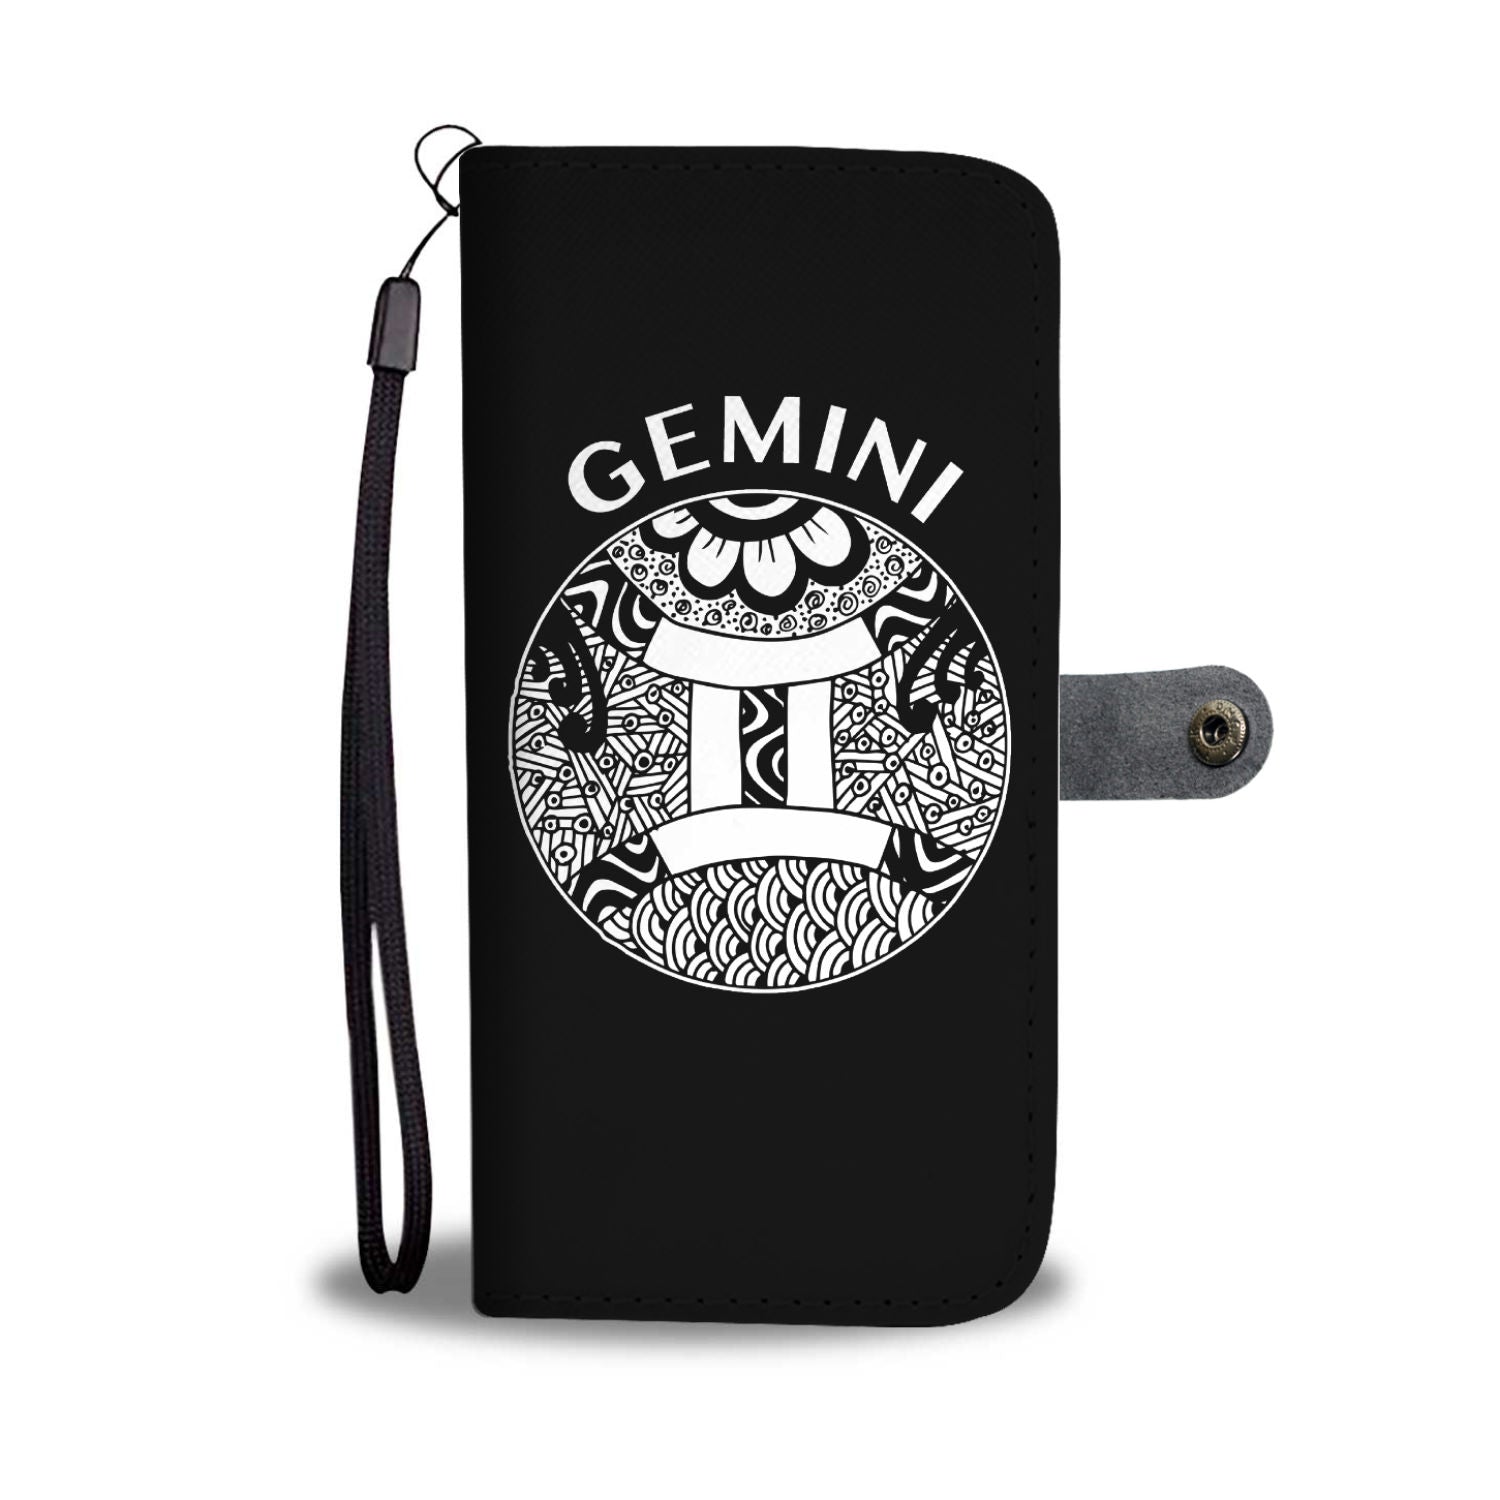 Gemini Circle Phone Wallet